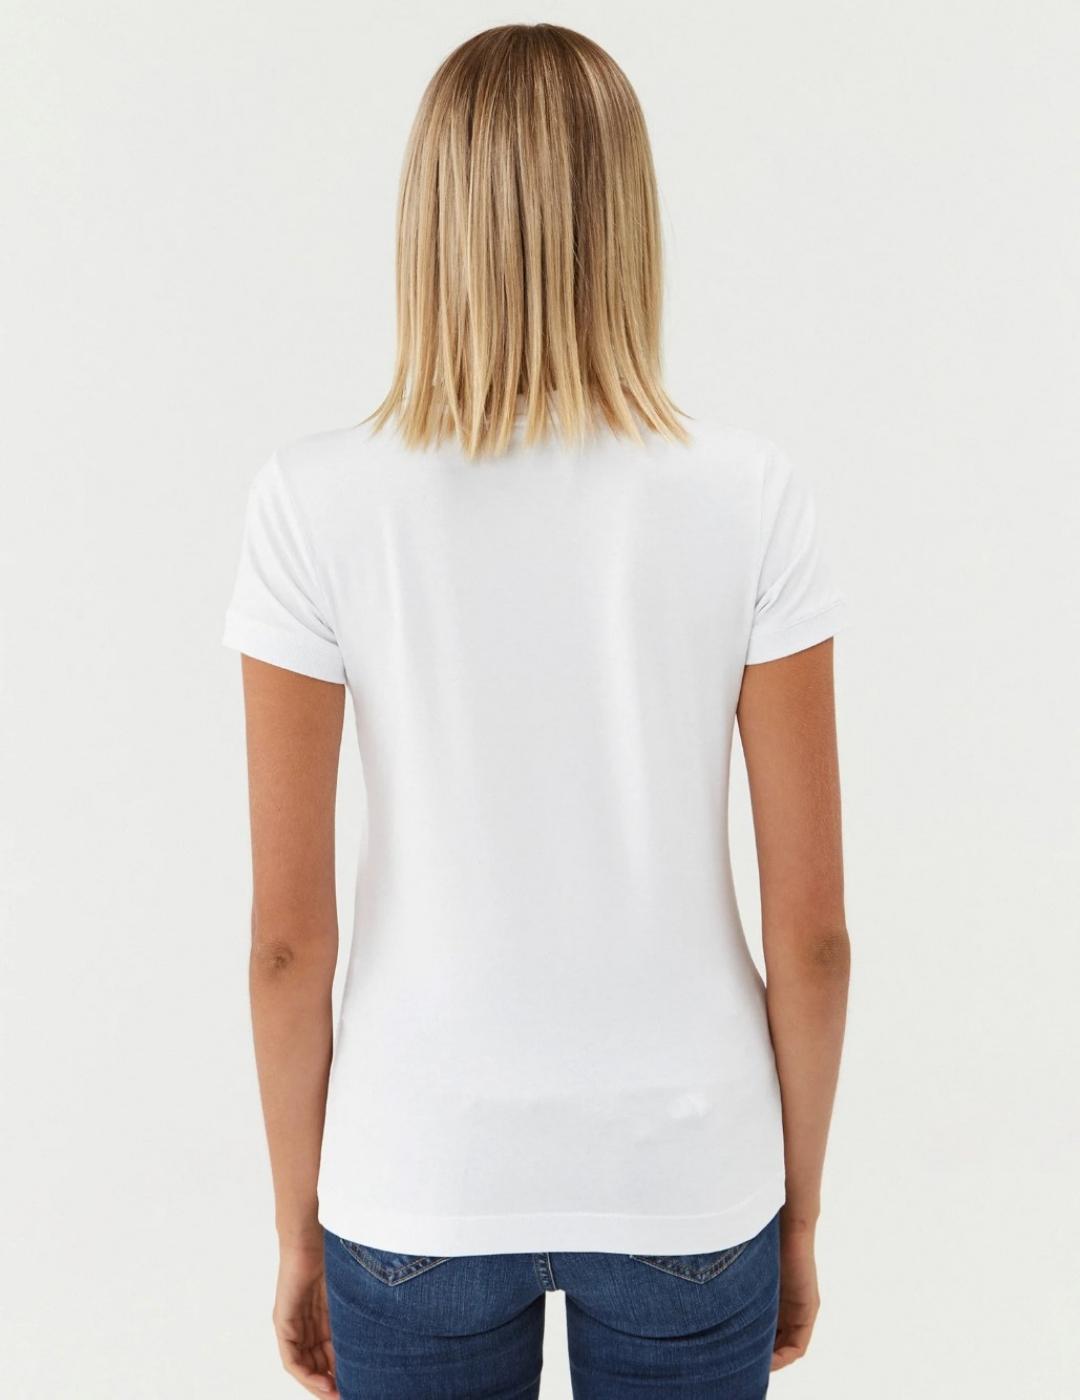 Camiseta Guess StarTriangle blanca para mujer